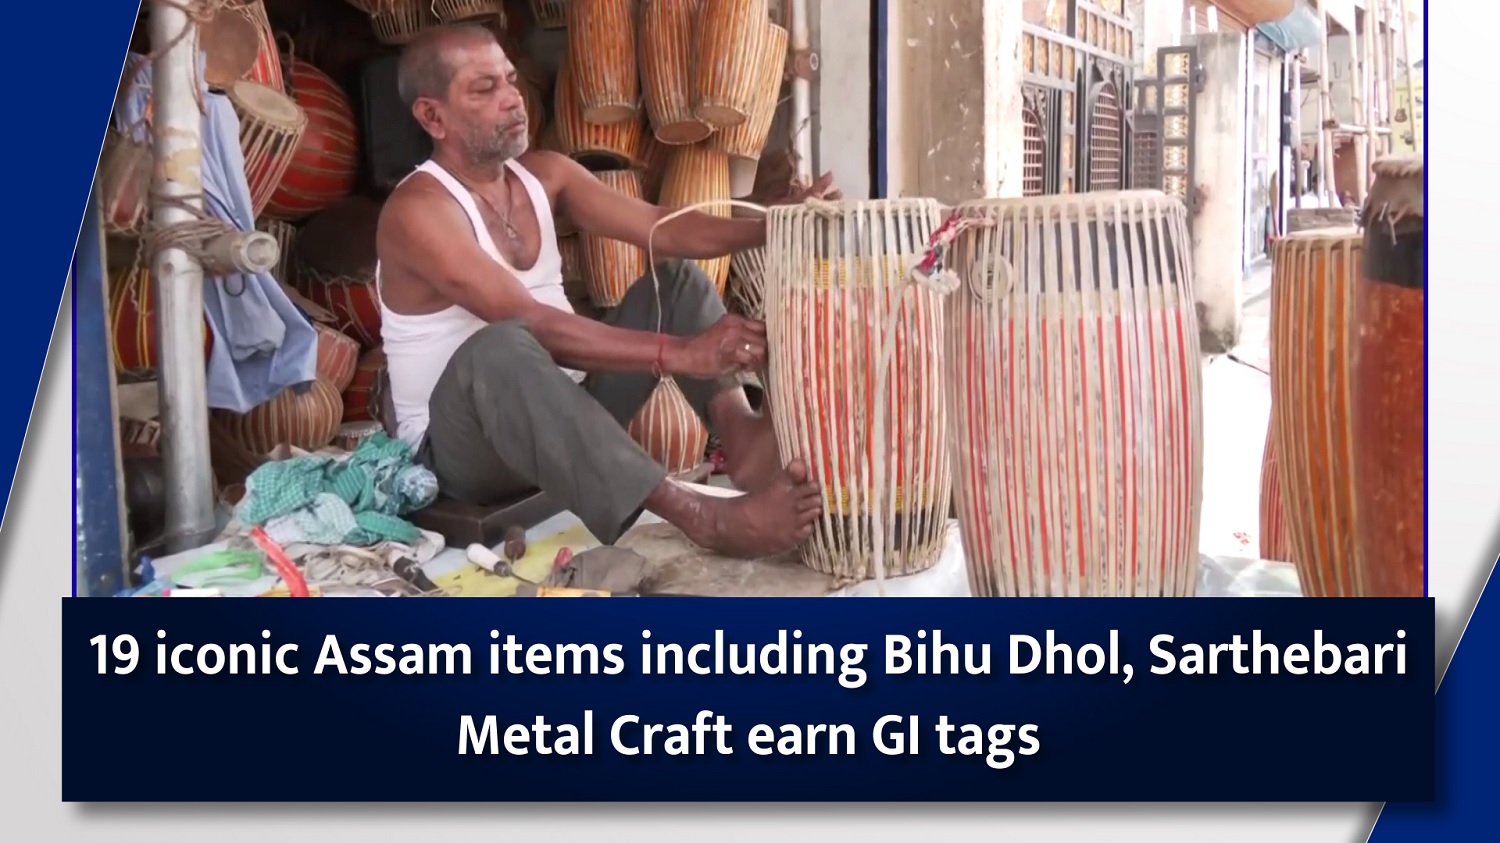 19 iconic Assam items including Bihu Dhol, Sarthebari Metal Craft earn GI tags